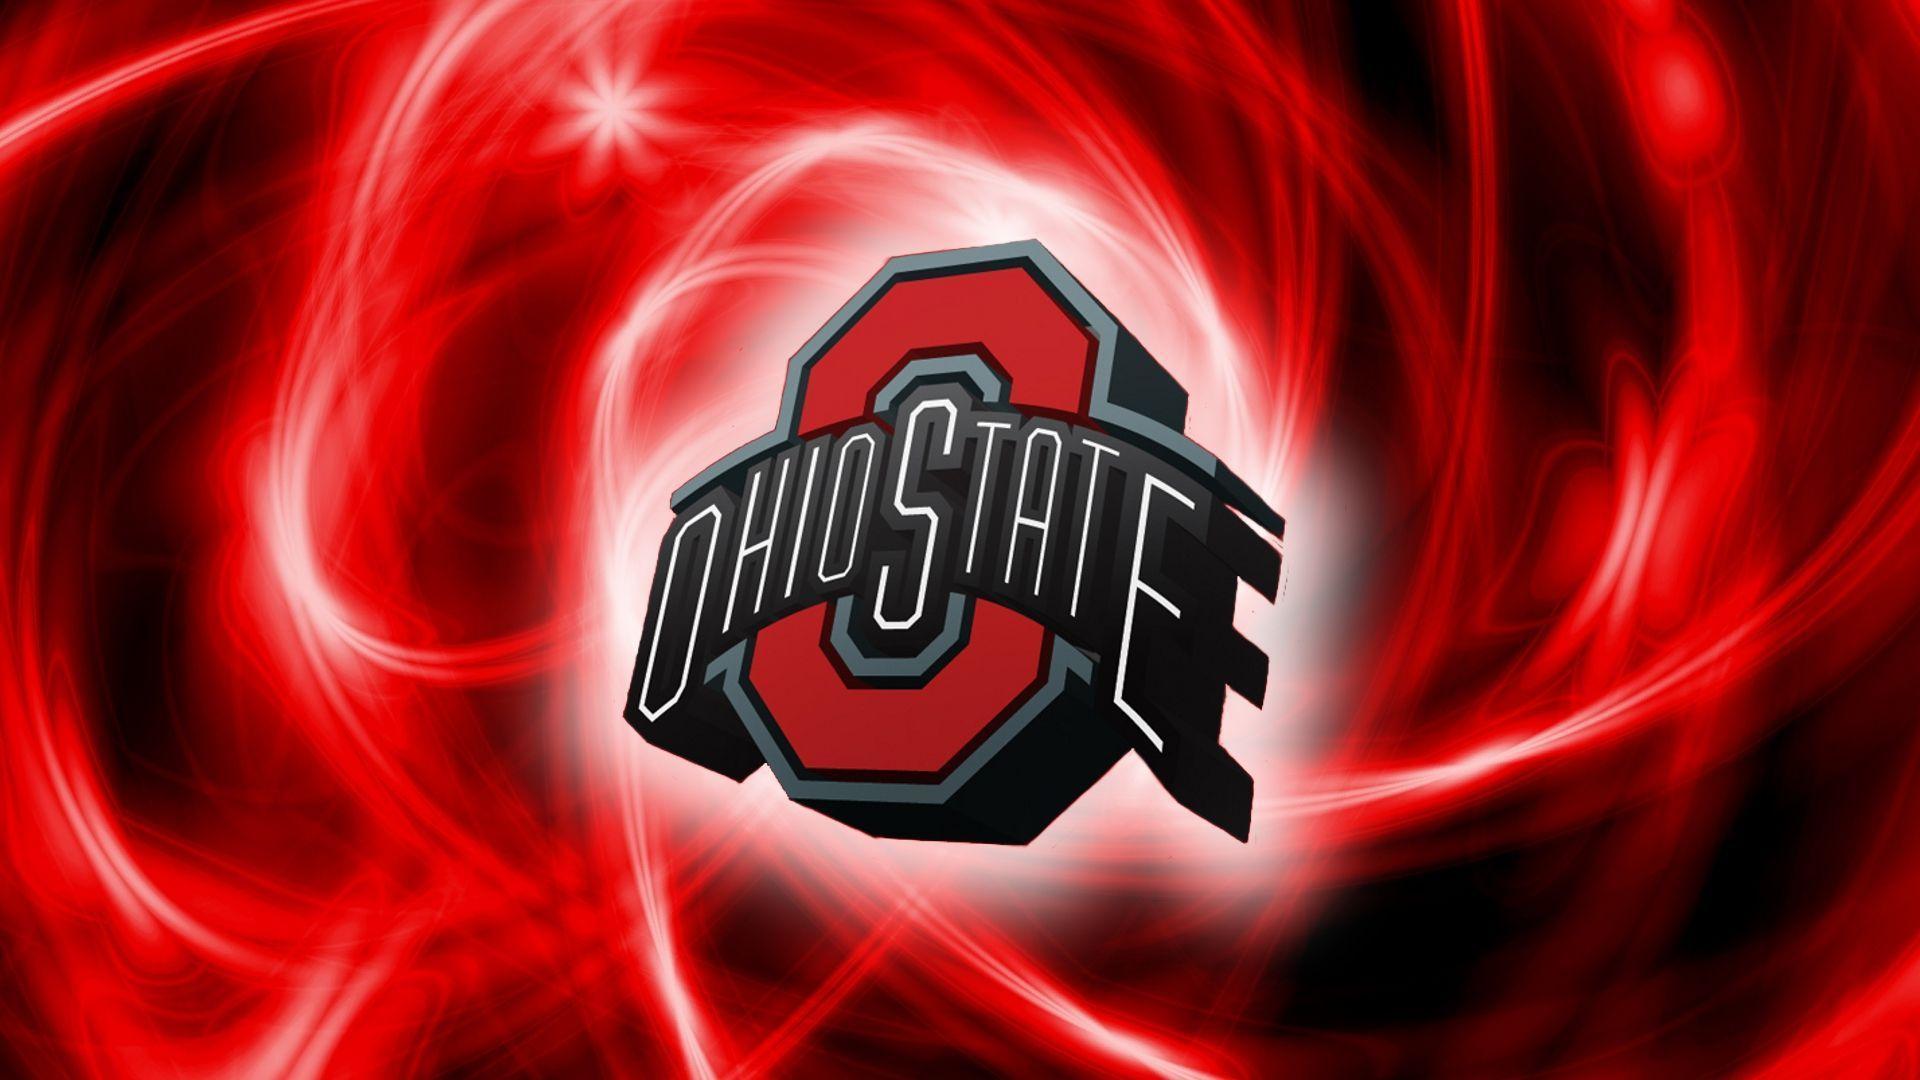 Ohio State Football Logo 14, Photo, Image in High